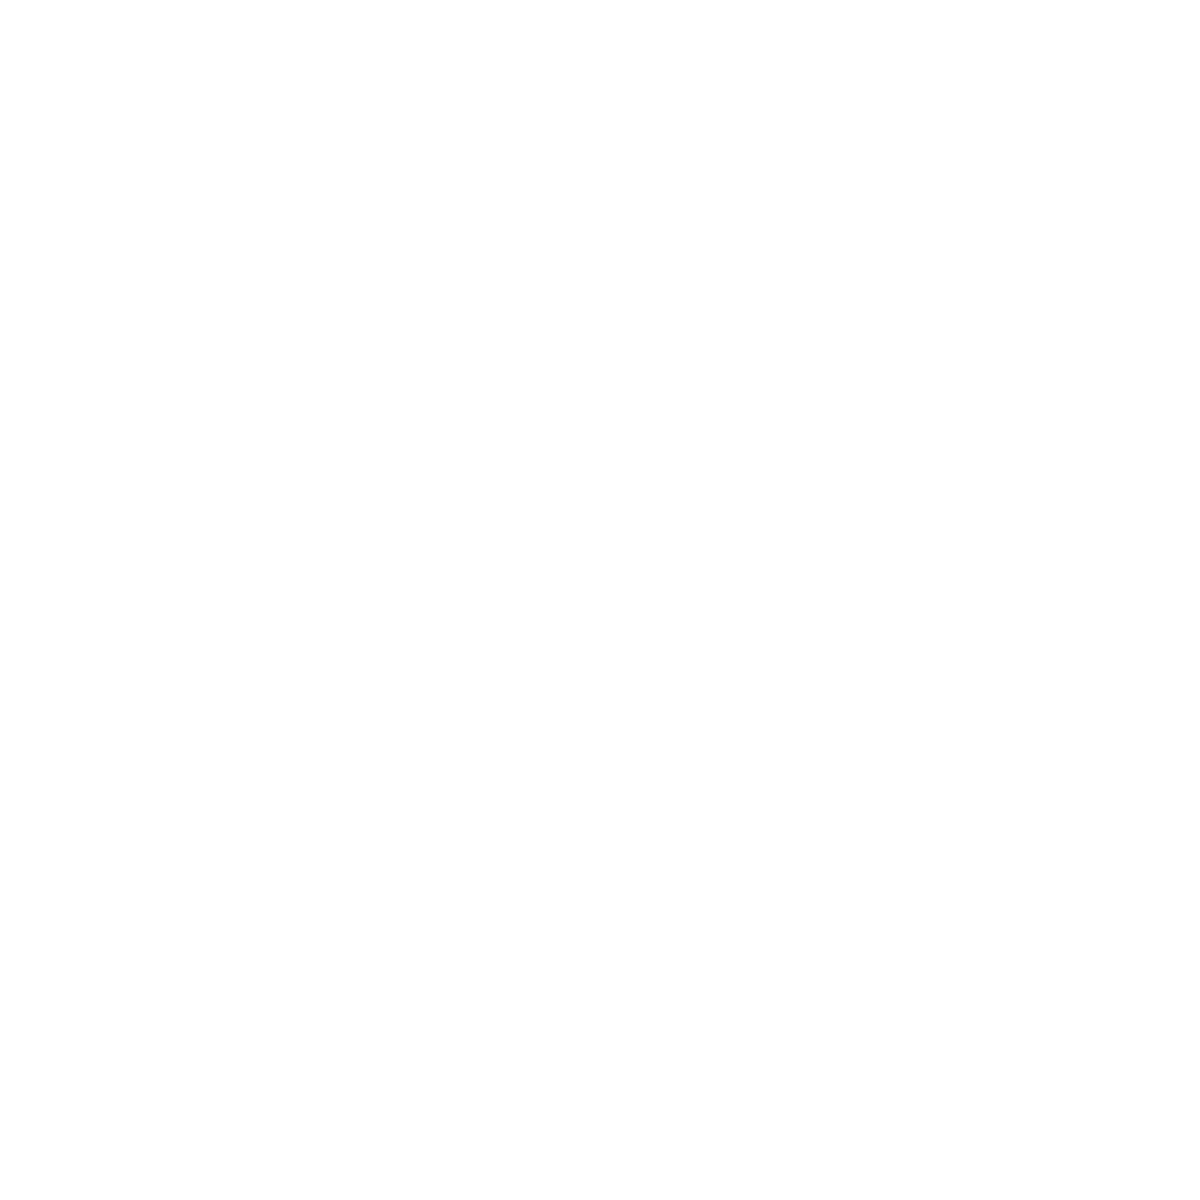 Newport Festivals Foundation